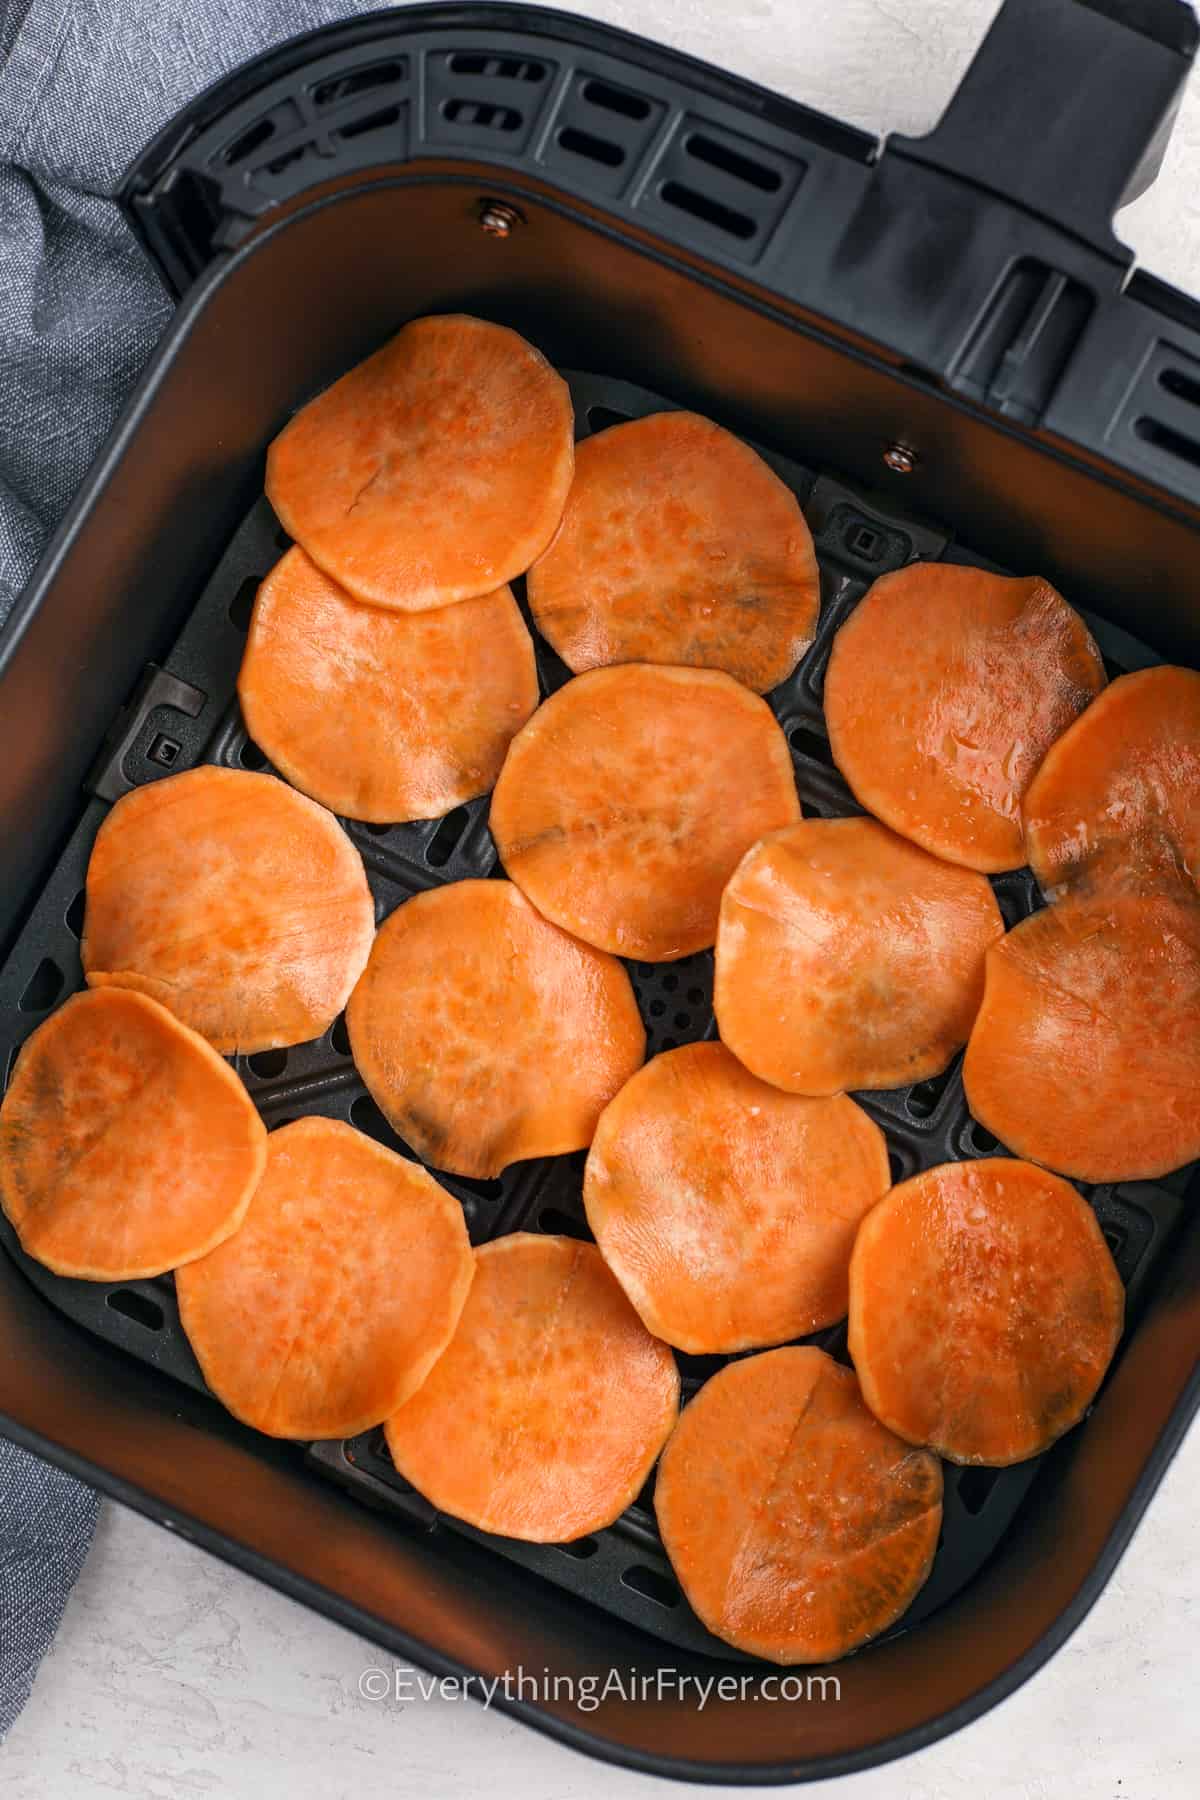 Sweet potato slices in an air fryer basket